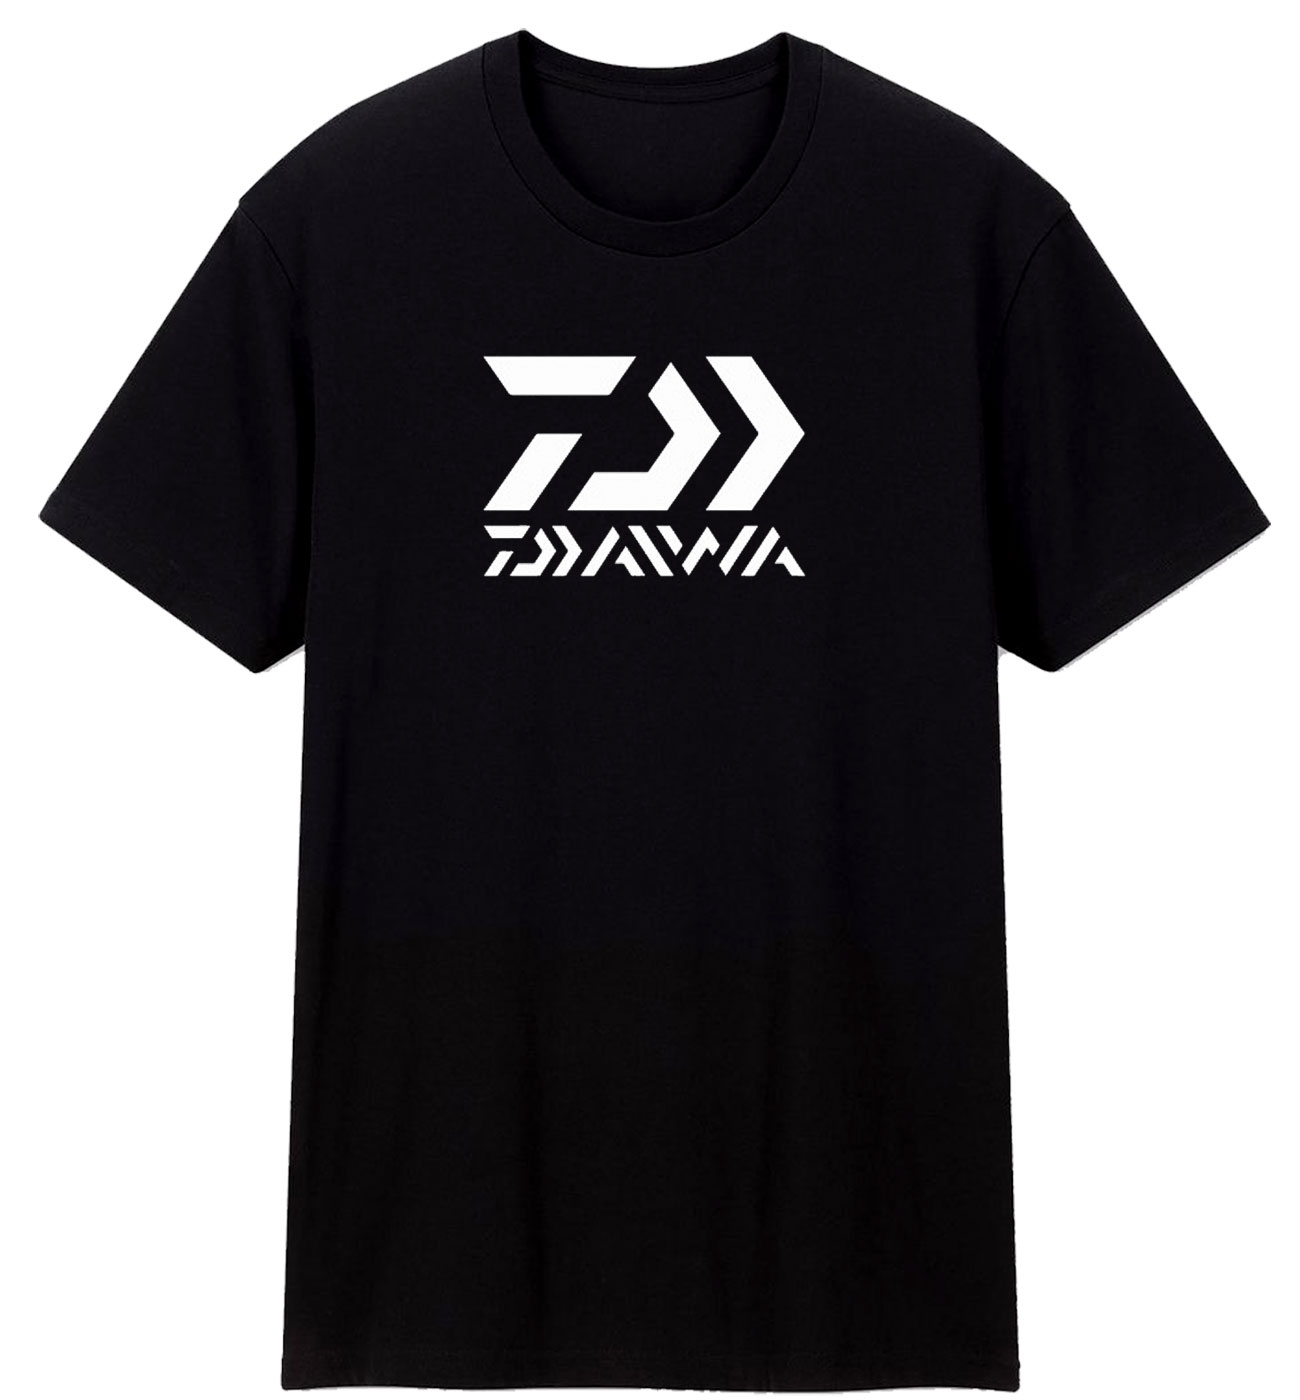 https://shopbelike.com/wp-content/uploads/2021/08/Daiwa-Fishing-T-Shirt.jpeg